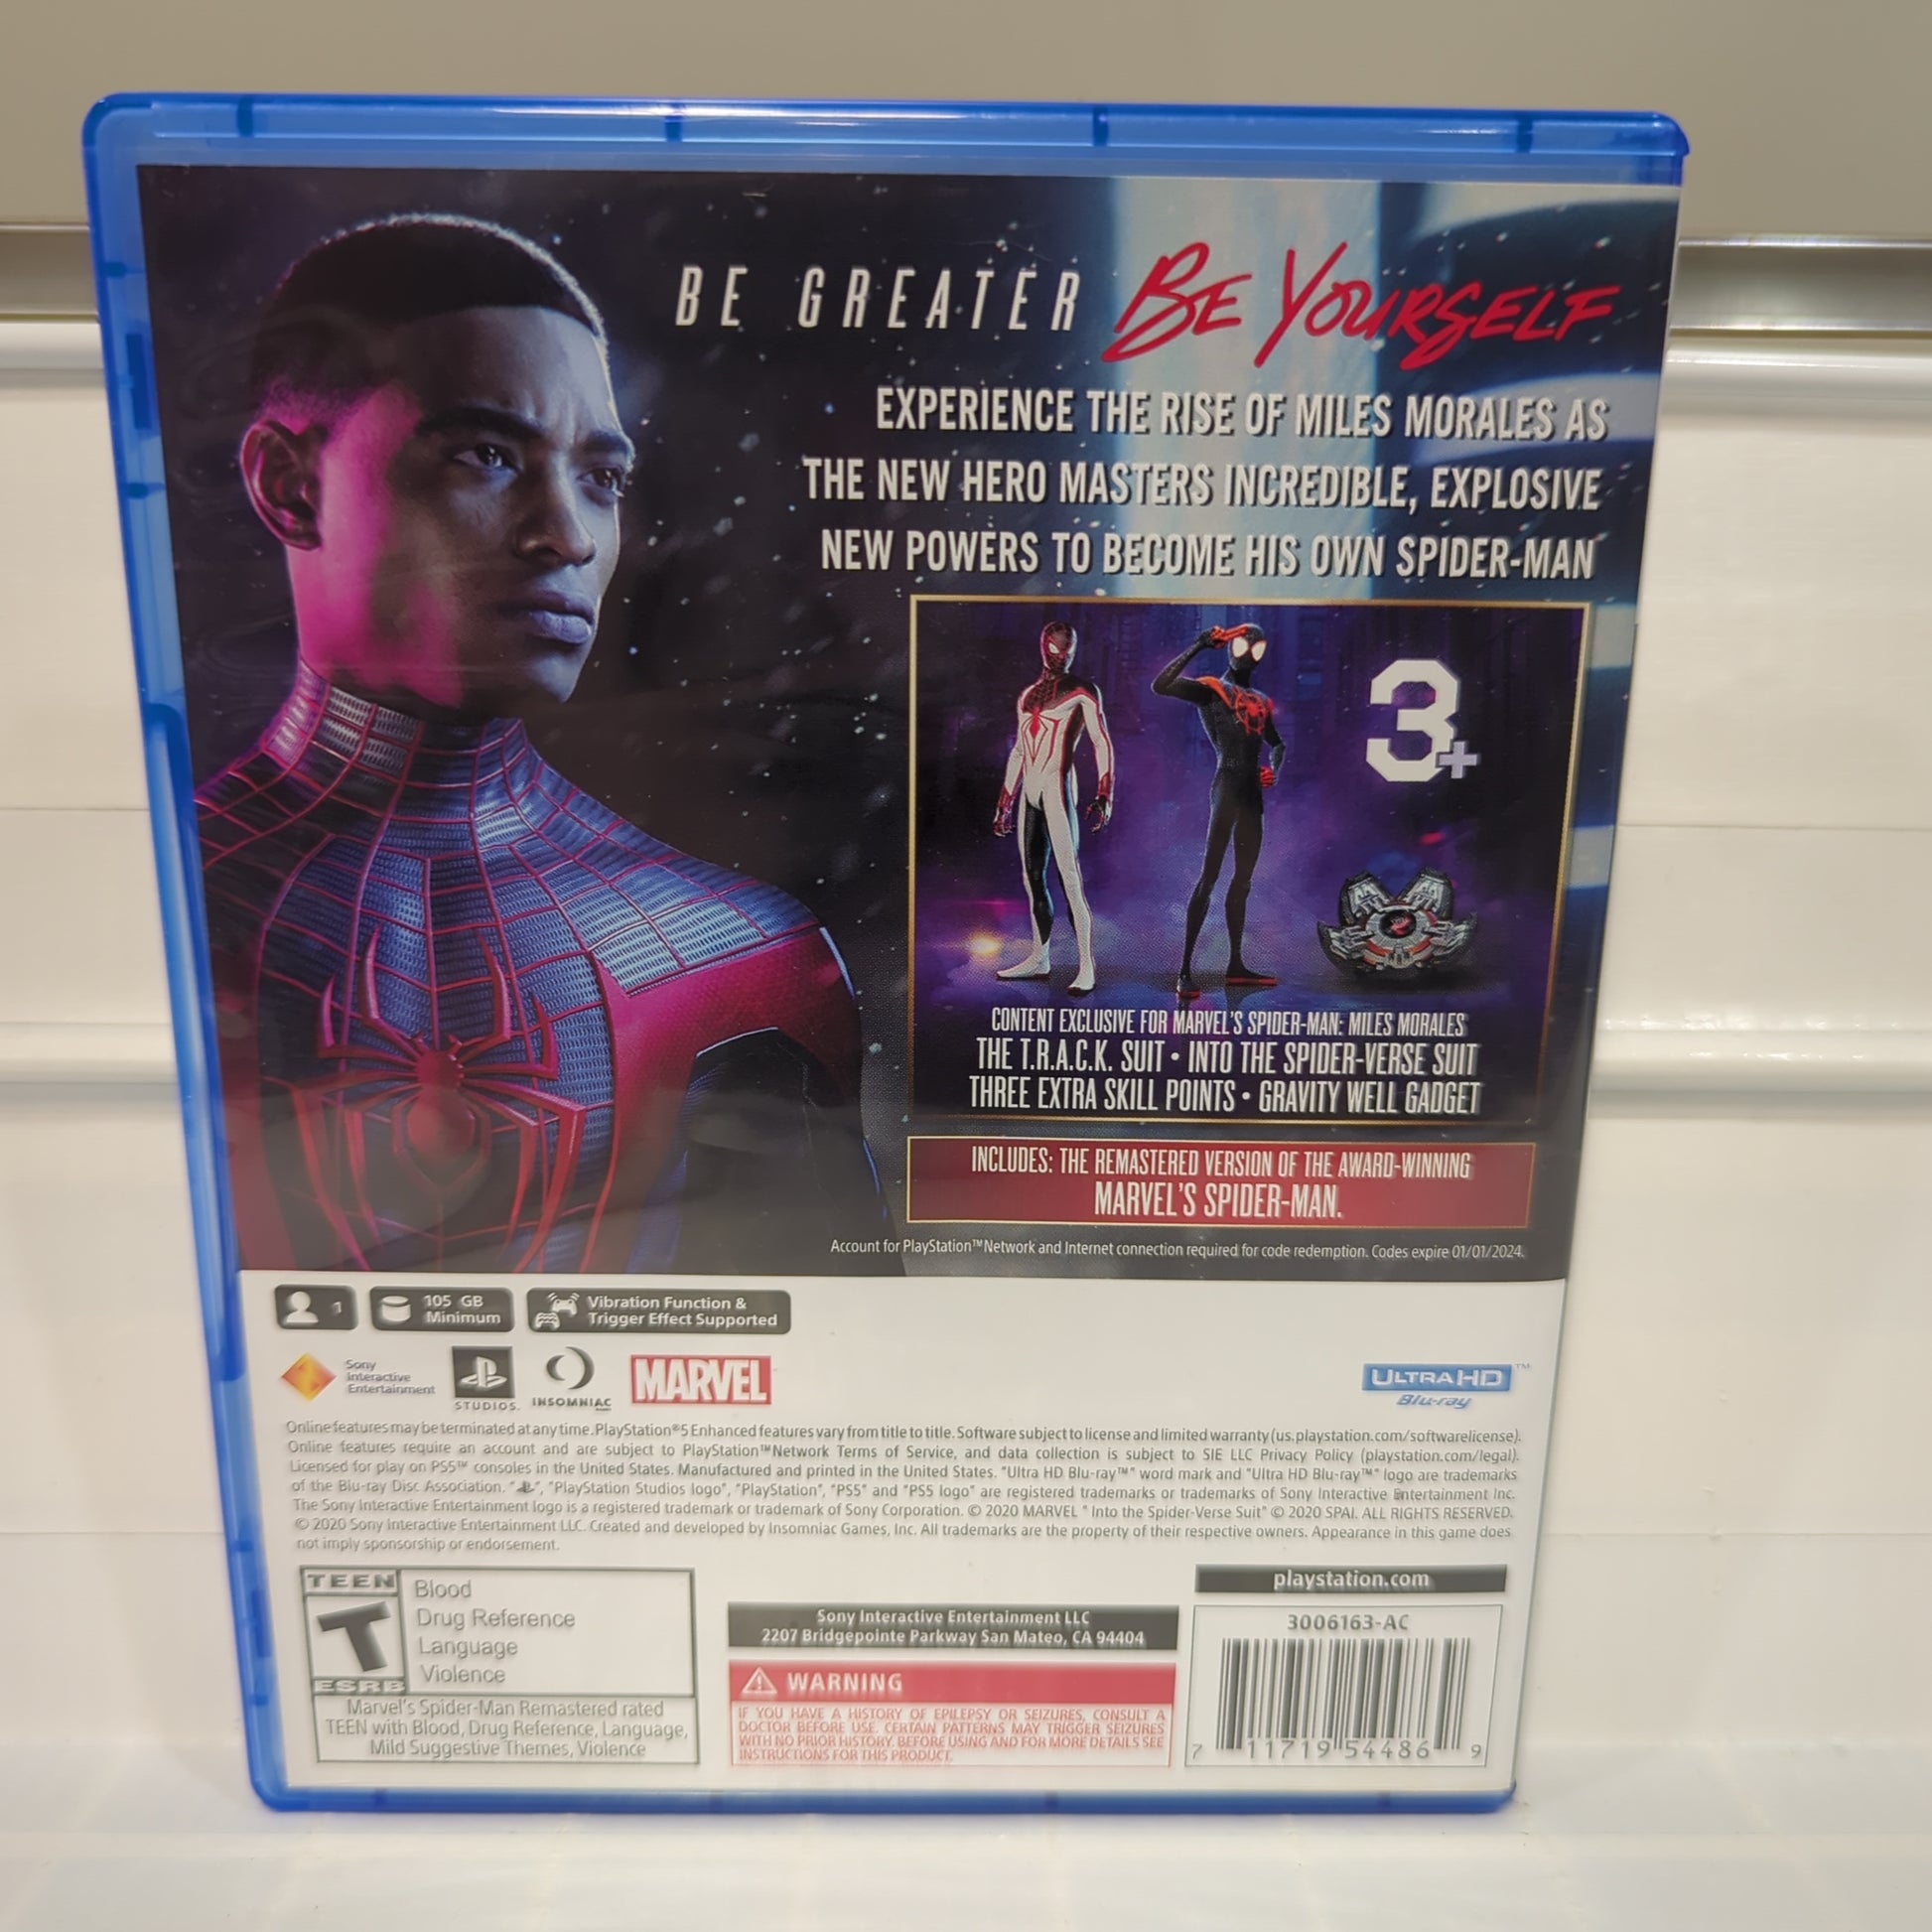  Marvel's Spider-Man: Miles Morales – PlayStation 5